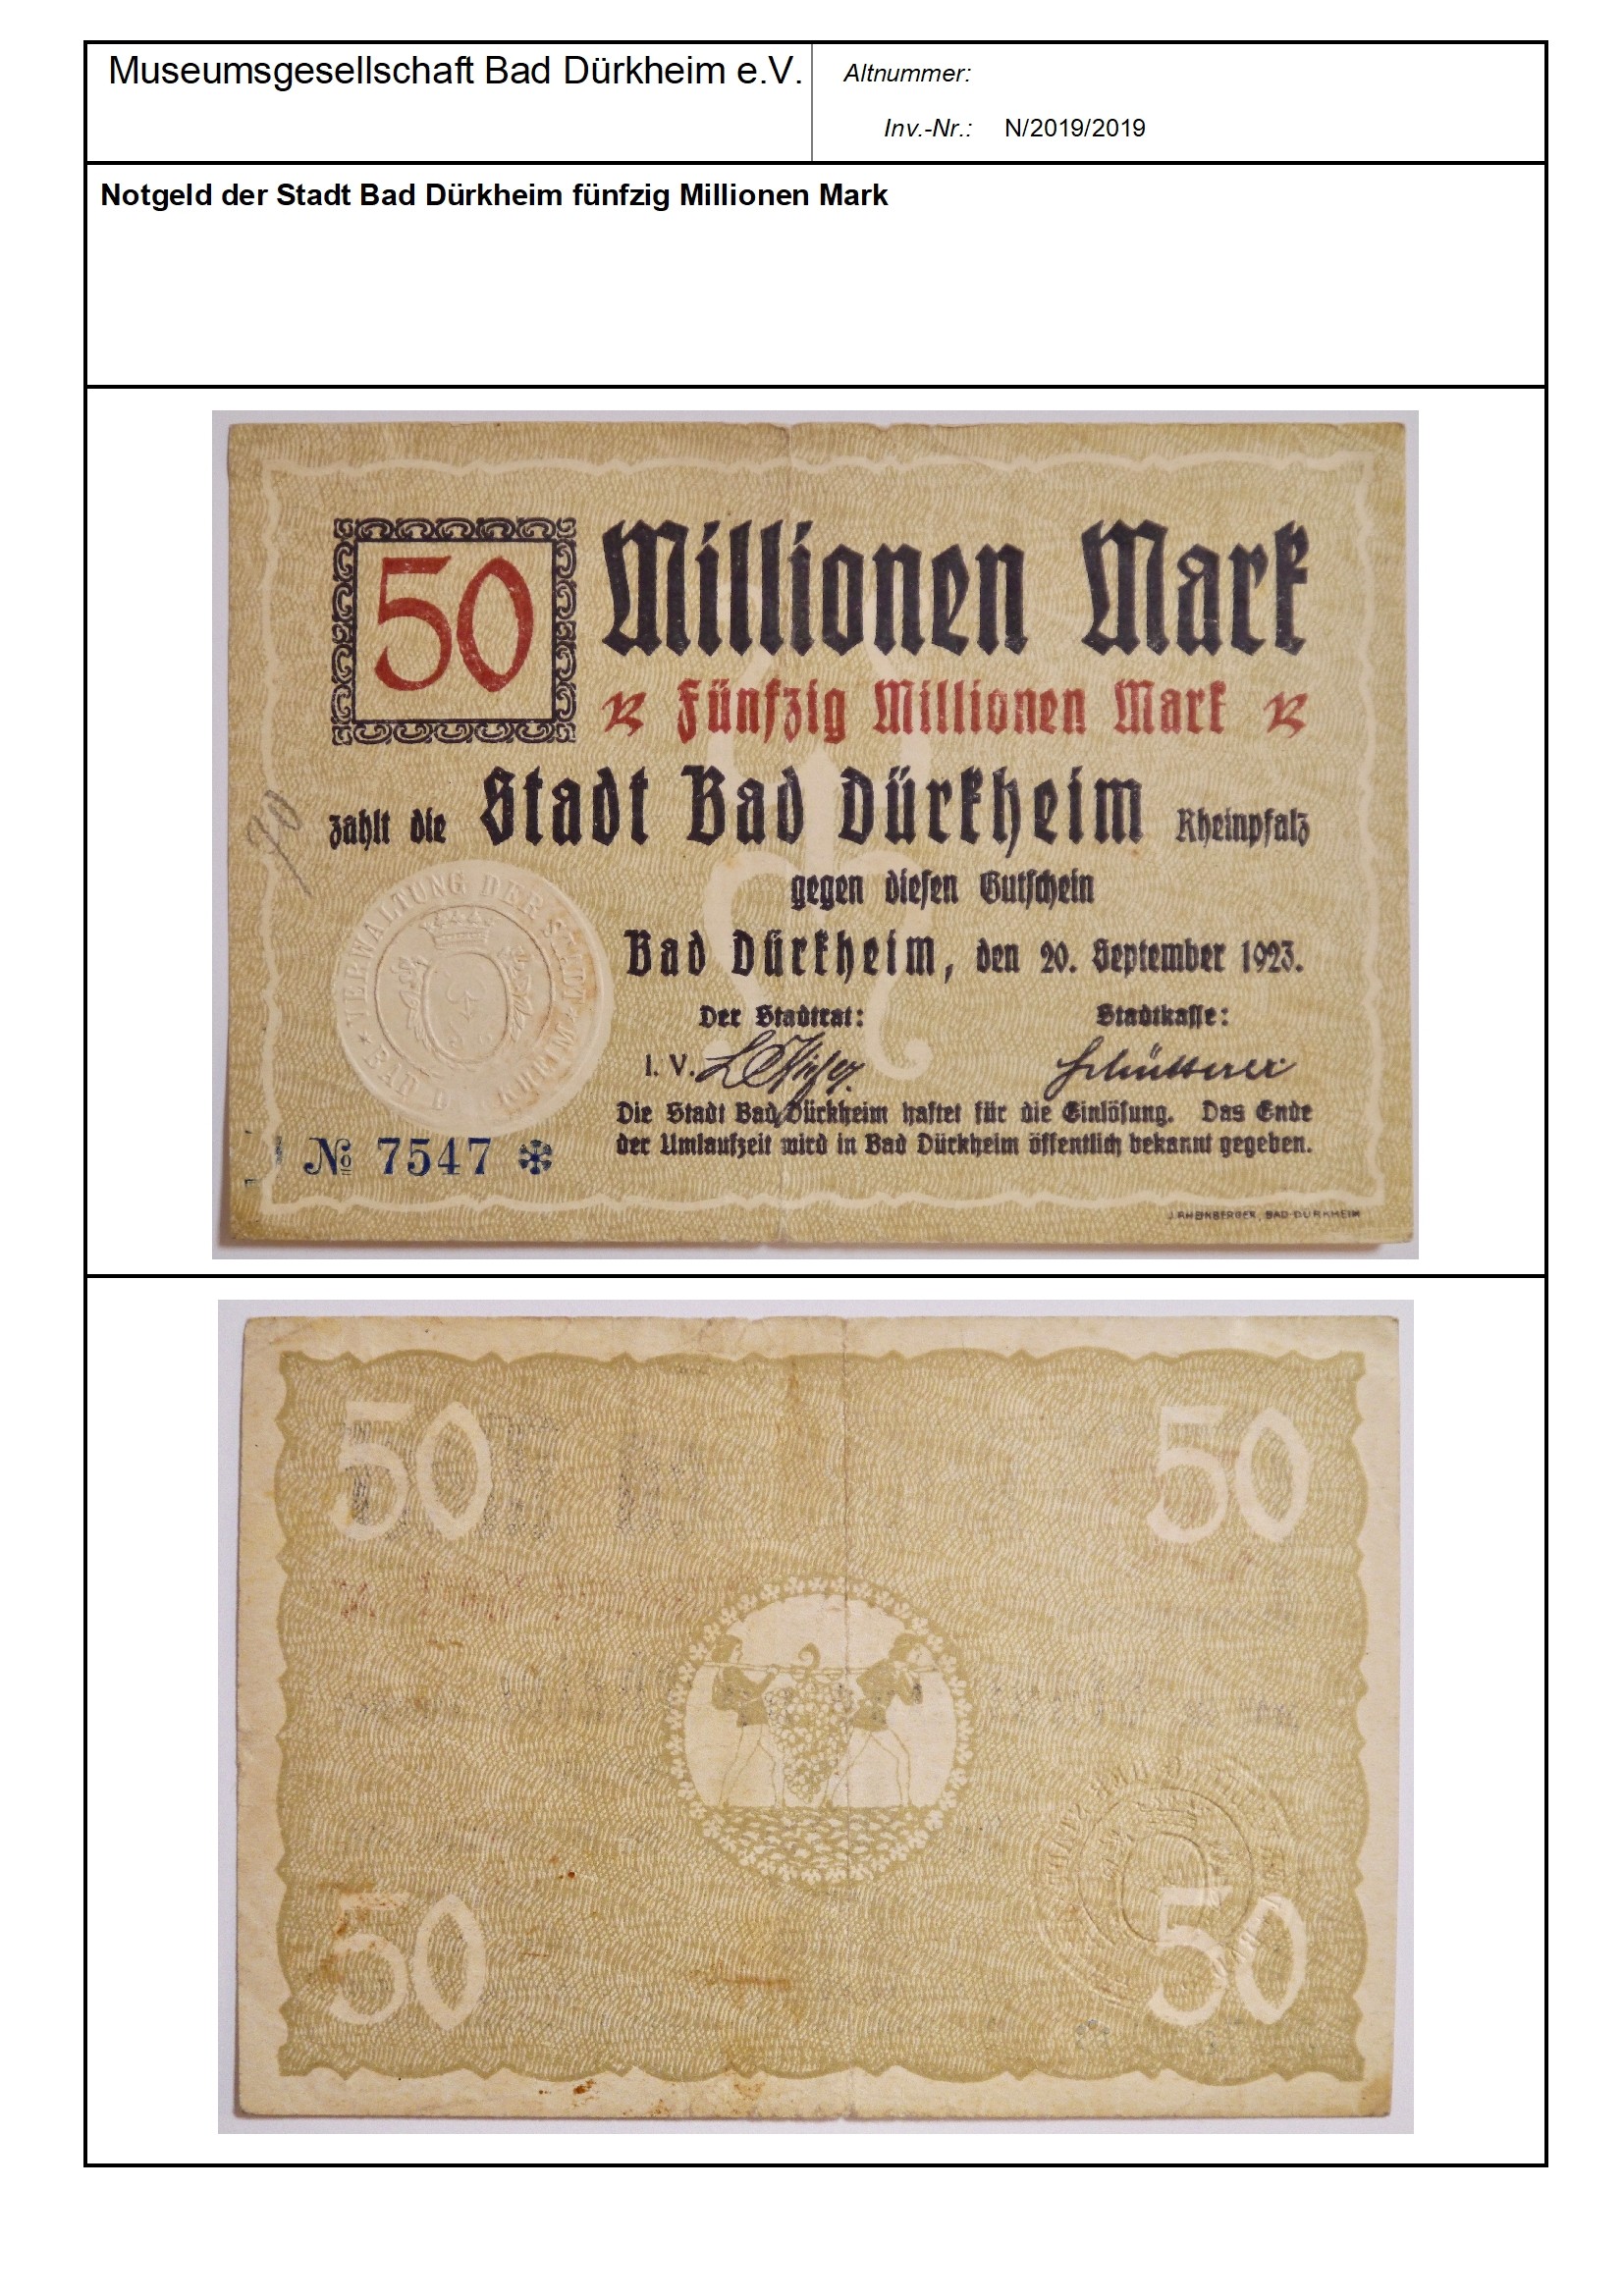 Notgeld der Stadt Bad Dürkheim fünfzig Millionen MarkSerien-Nummer: No 7547 * (Museumsgesellschaft Bad Dürkheim e.V. CC BY-NC-SA)